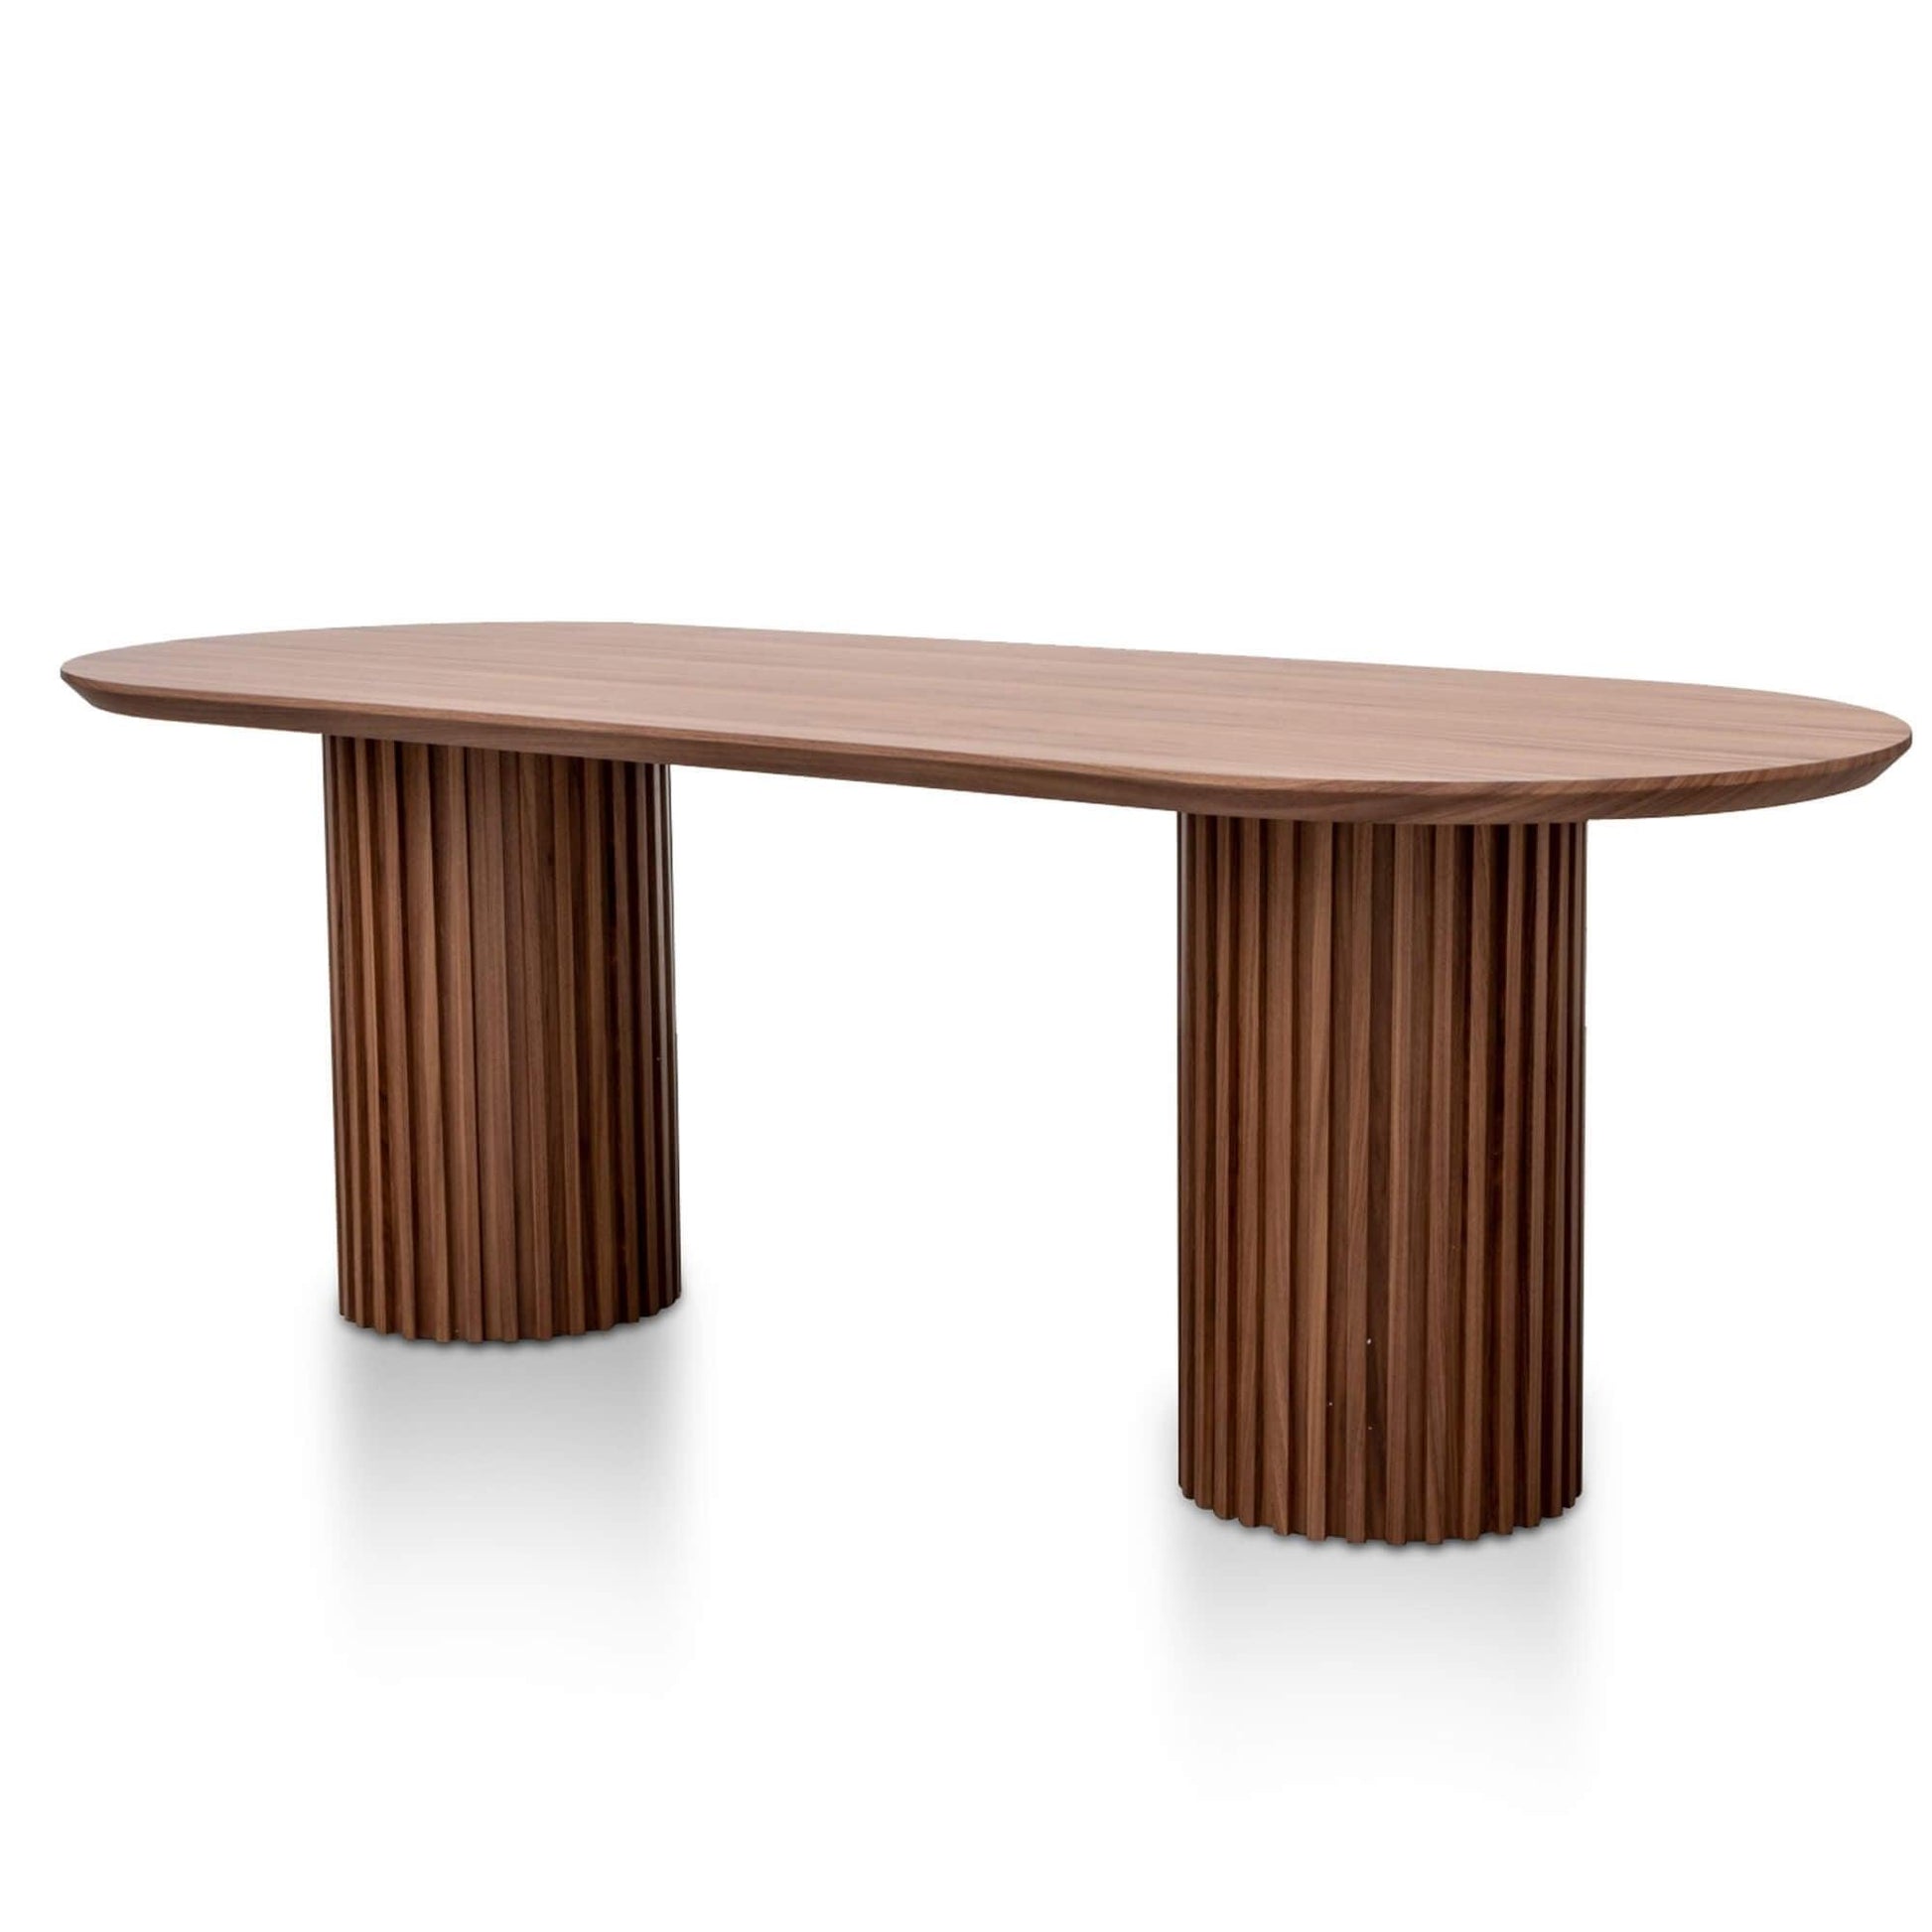 Calibre 2.2m Dining Table - Walnut DT2885-CN-Dining Tables-Calibre-Prime Furniture